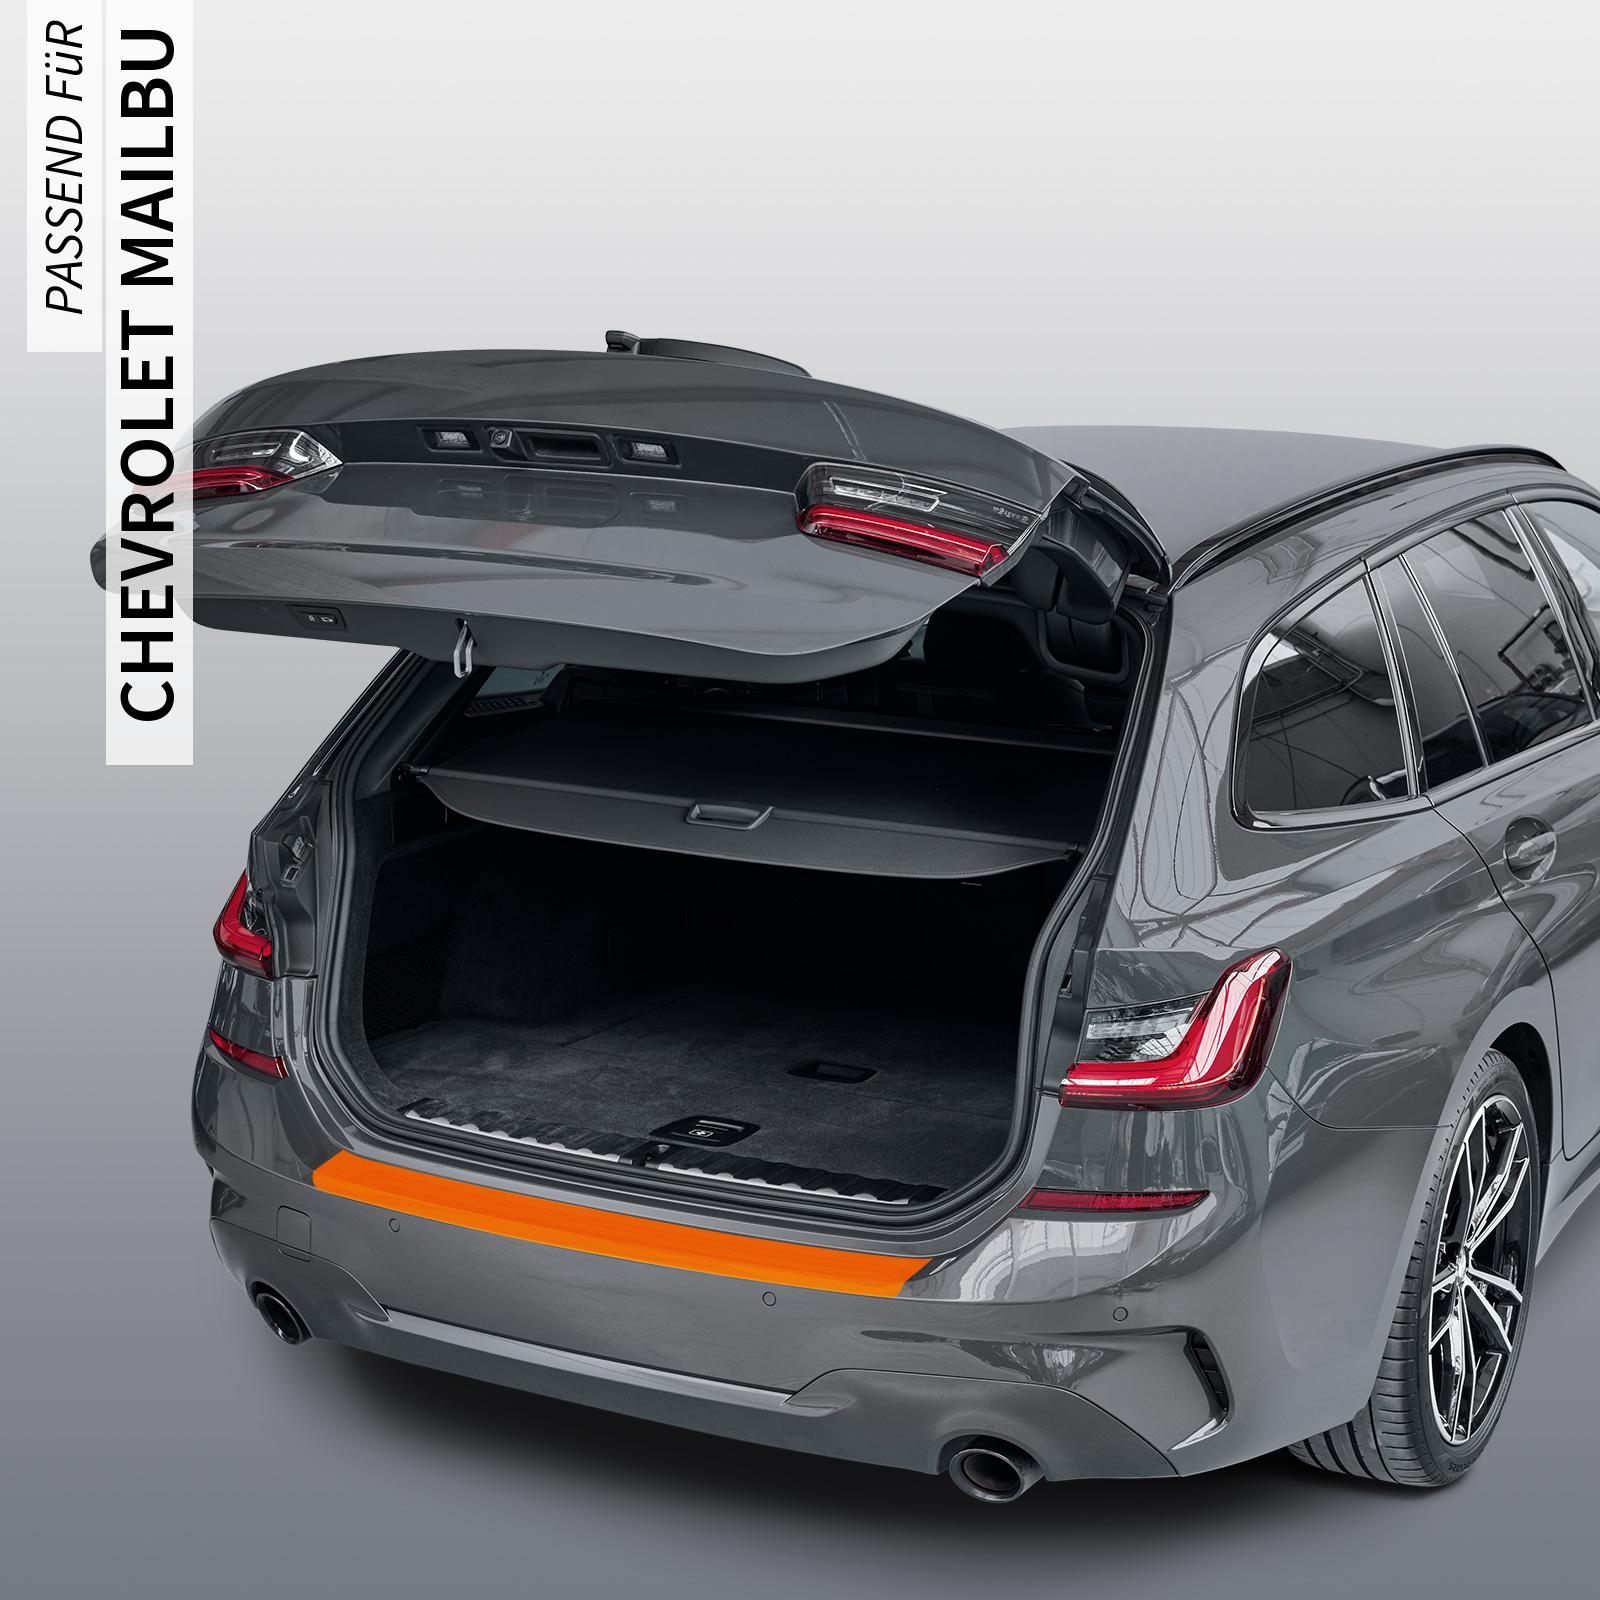 Ladekantenschutzfolie - Transparent Glatt MATT 110 µm stark  für Chevrolet Mailbu (IV) ab BJ 2011